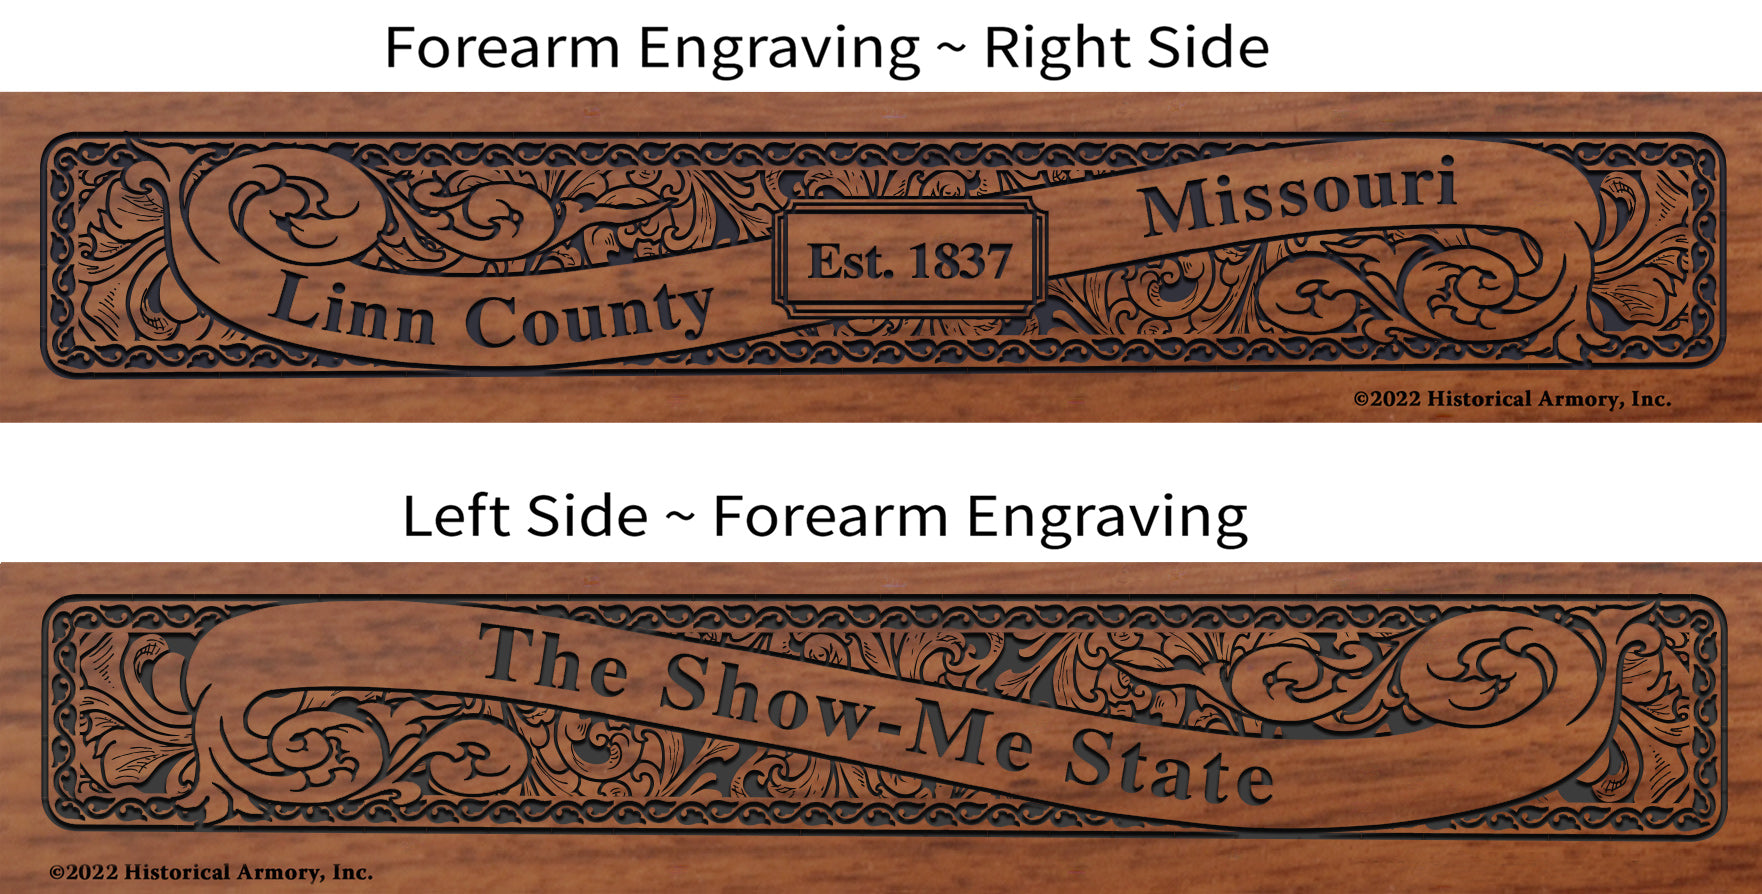 Linn County Missouri Engraved Rifle Forearm